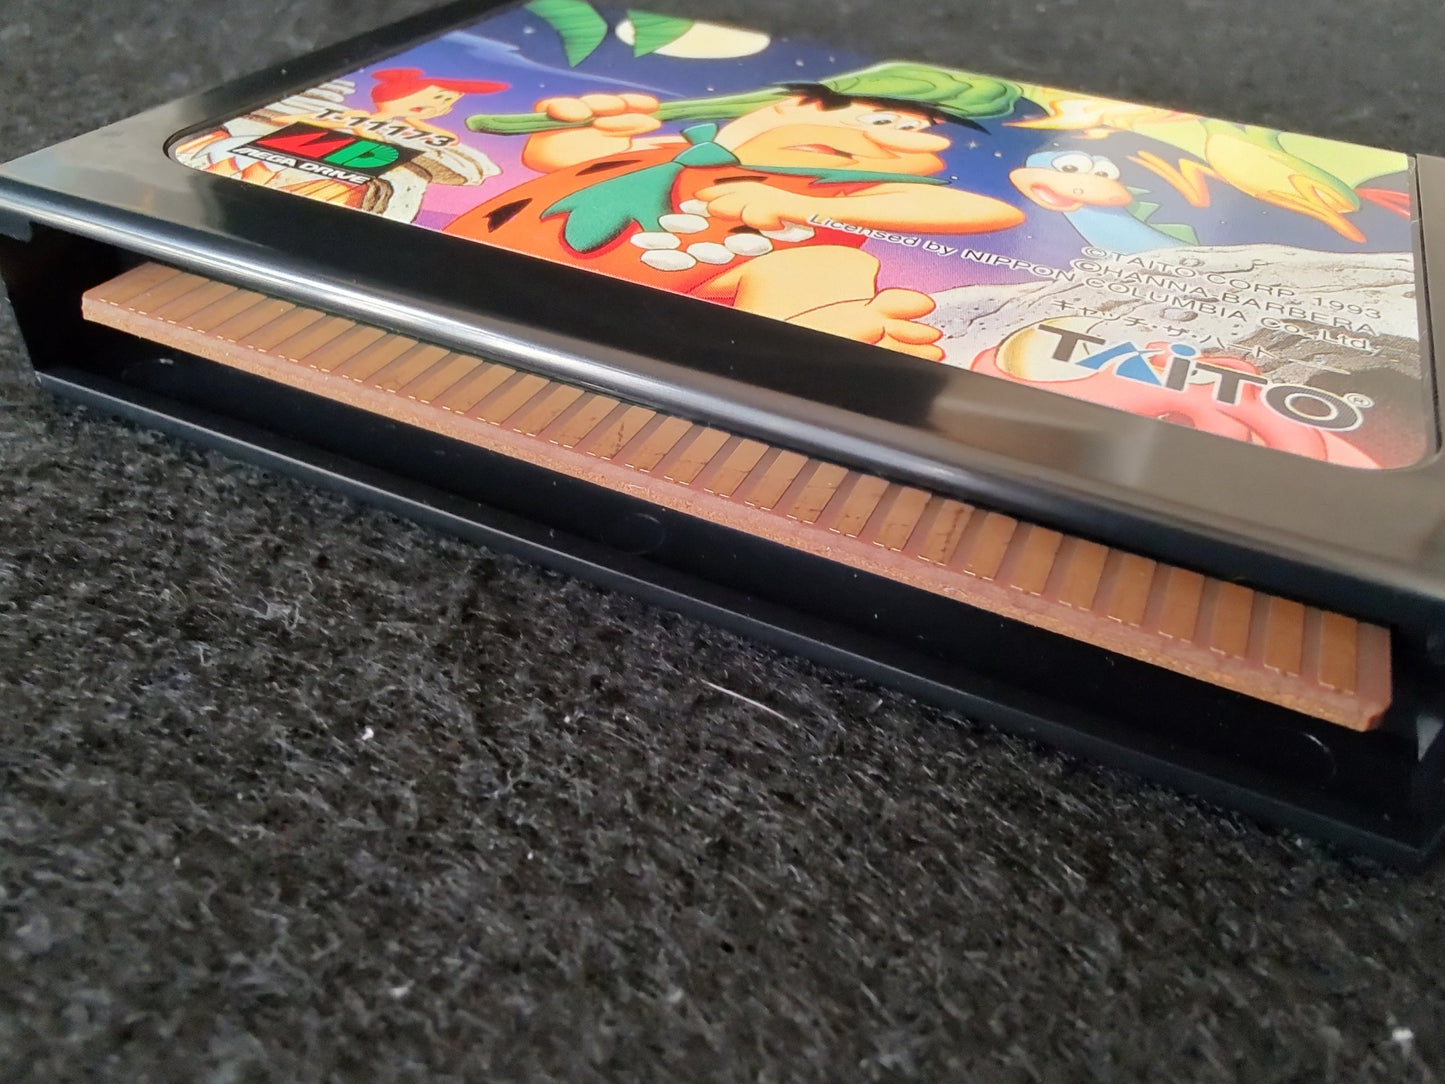 The Flintstones SEGA MEGA DRIVE game Genesis Cartridge Boxed, Working-f1111-